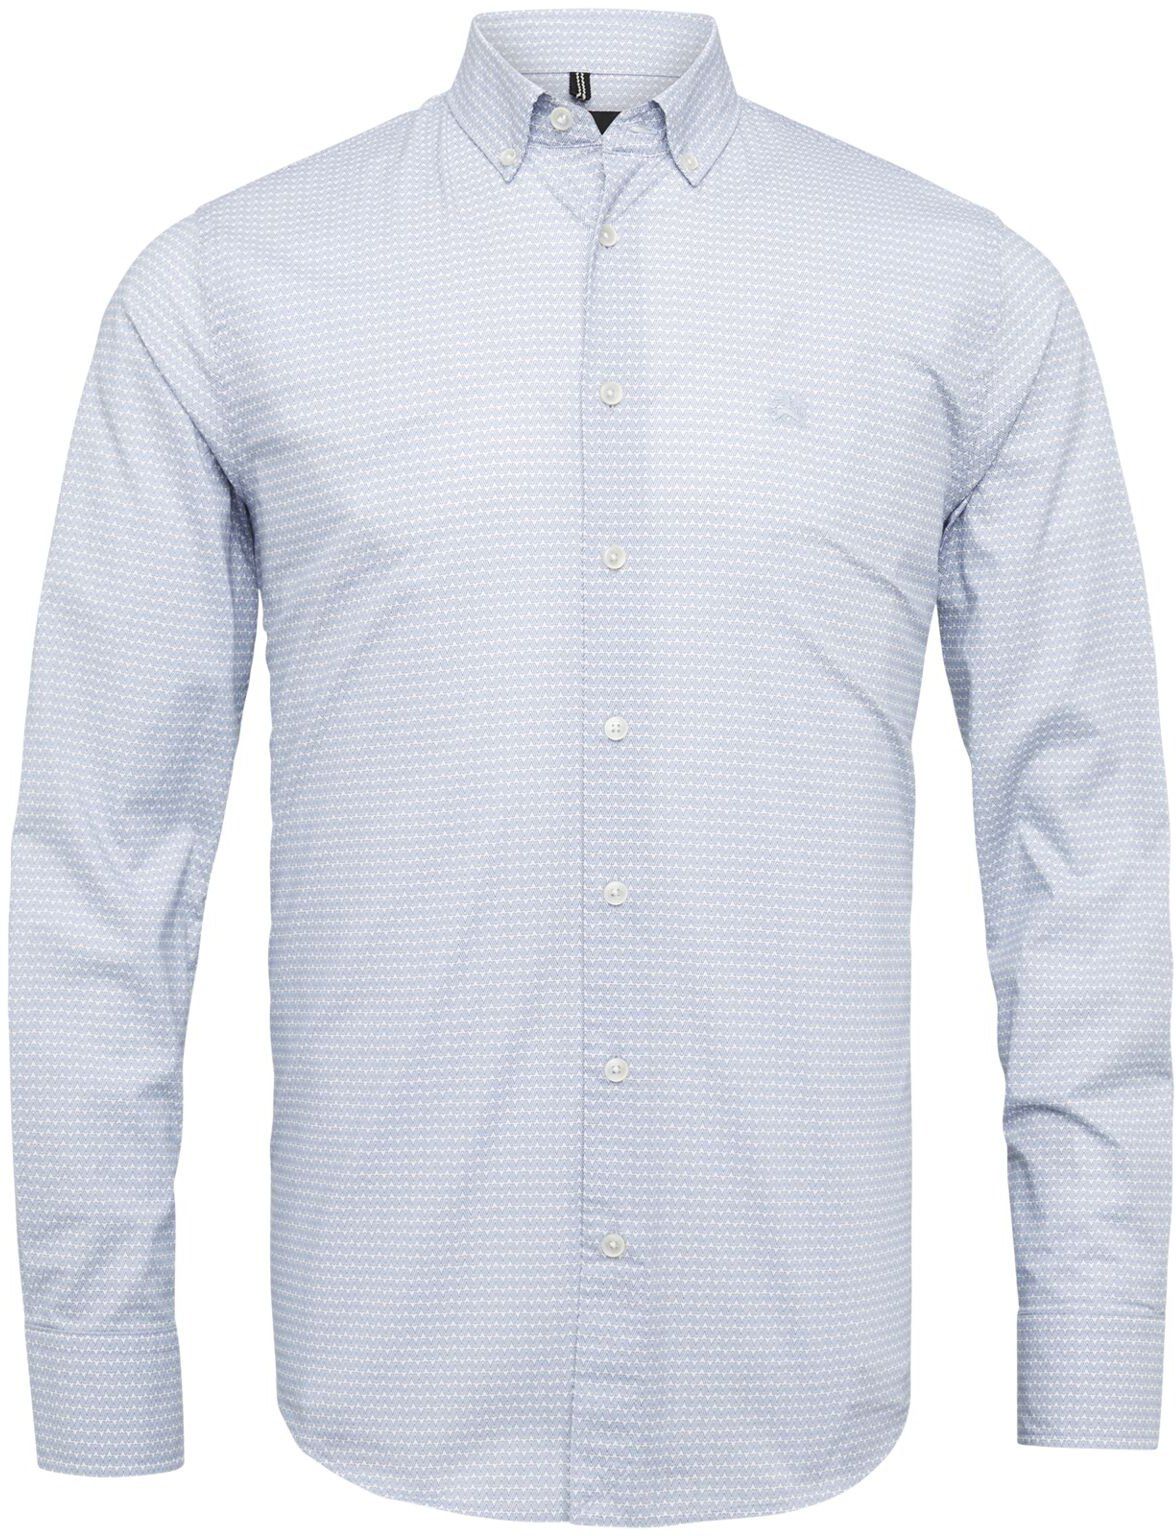 Vanguard Shirt Print Blue Multicolour White size L